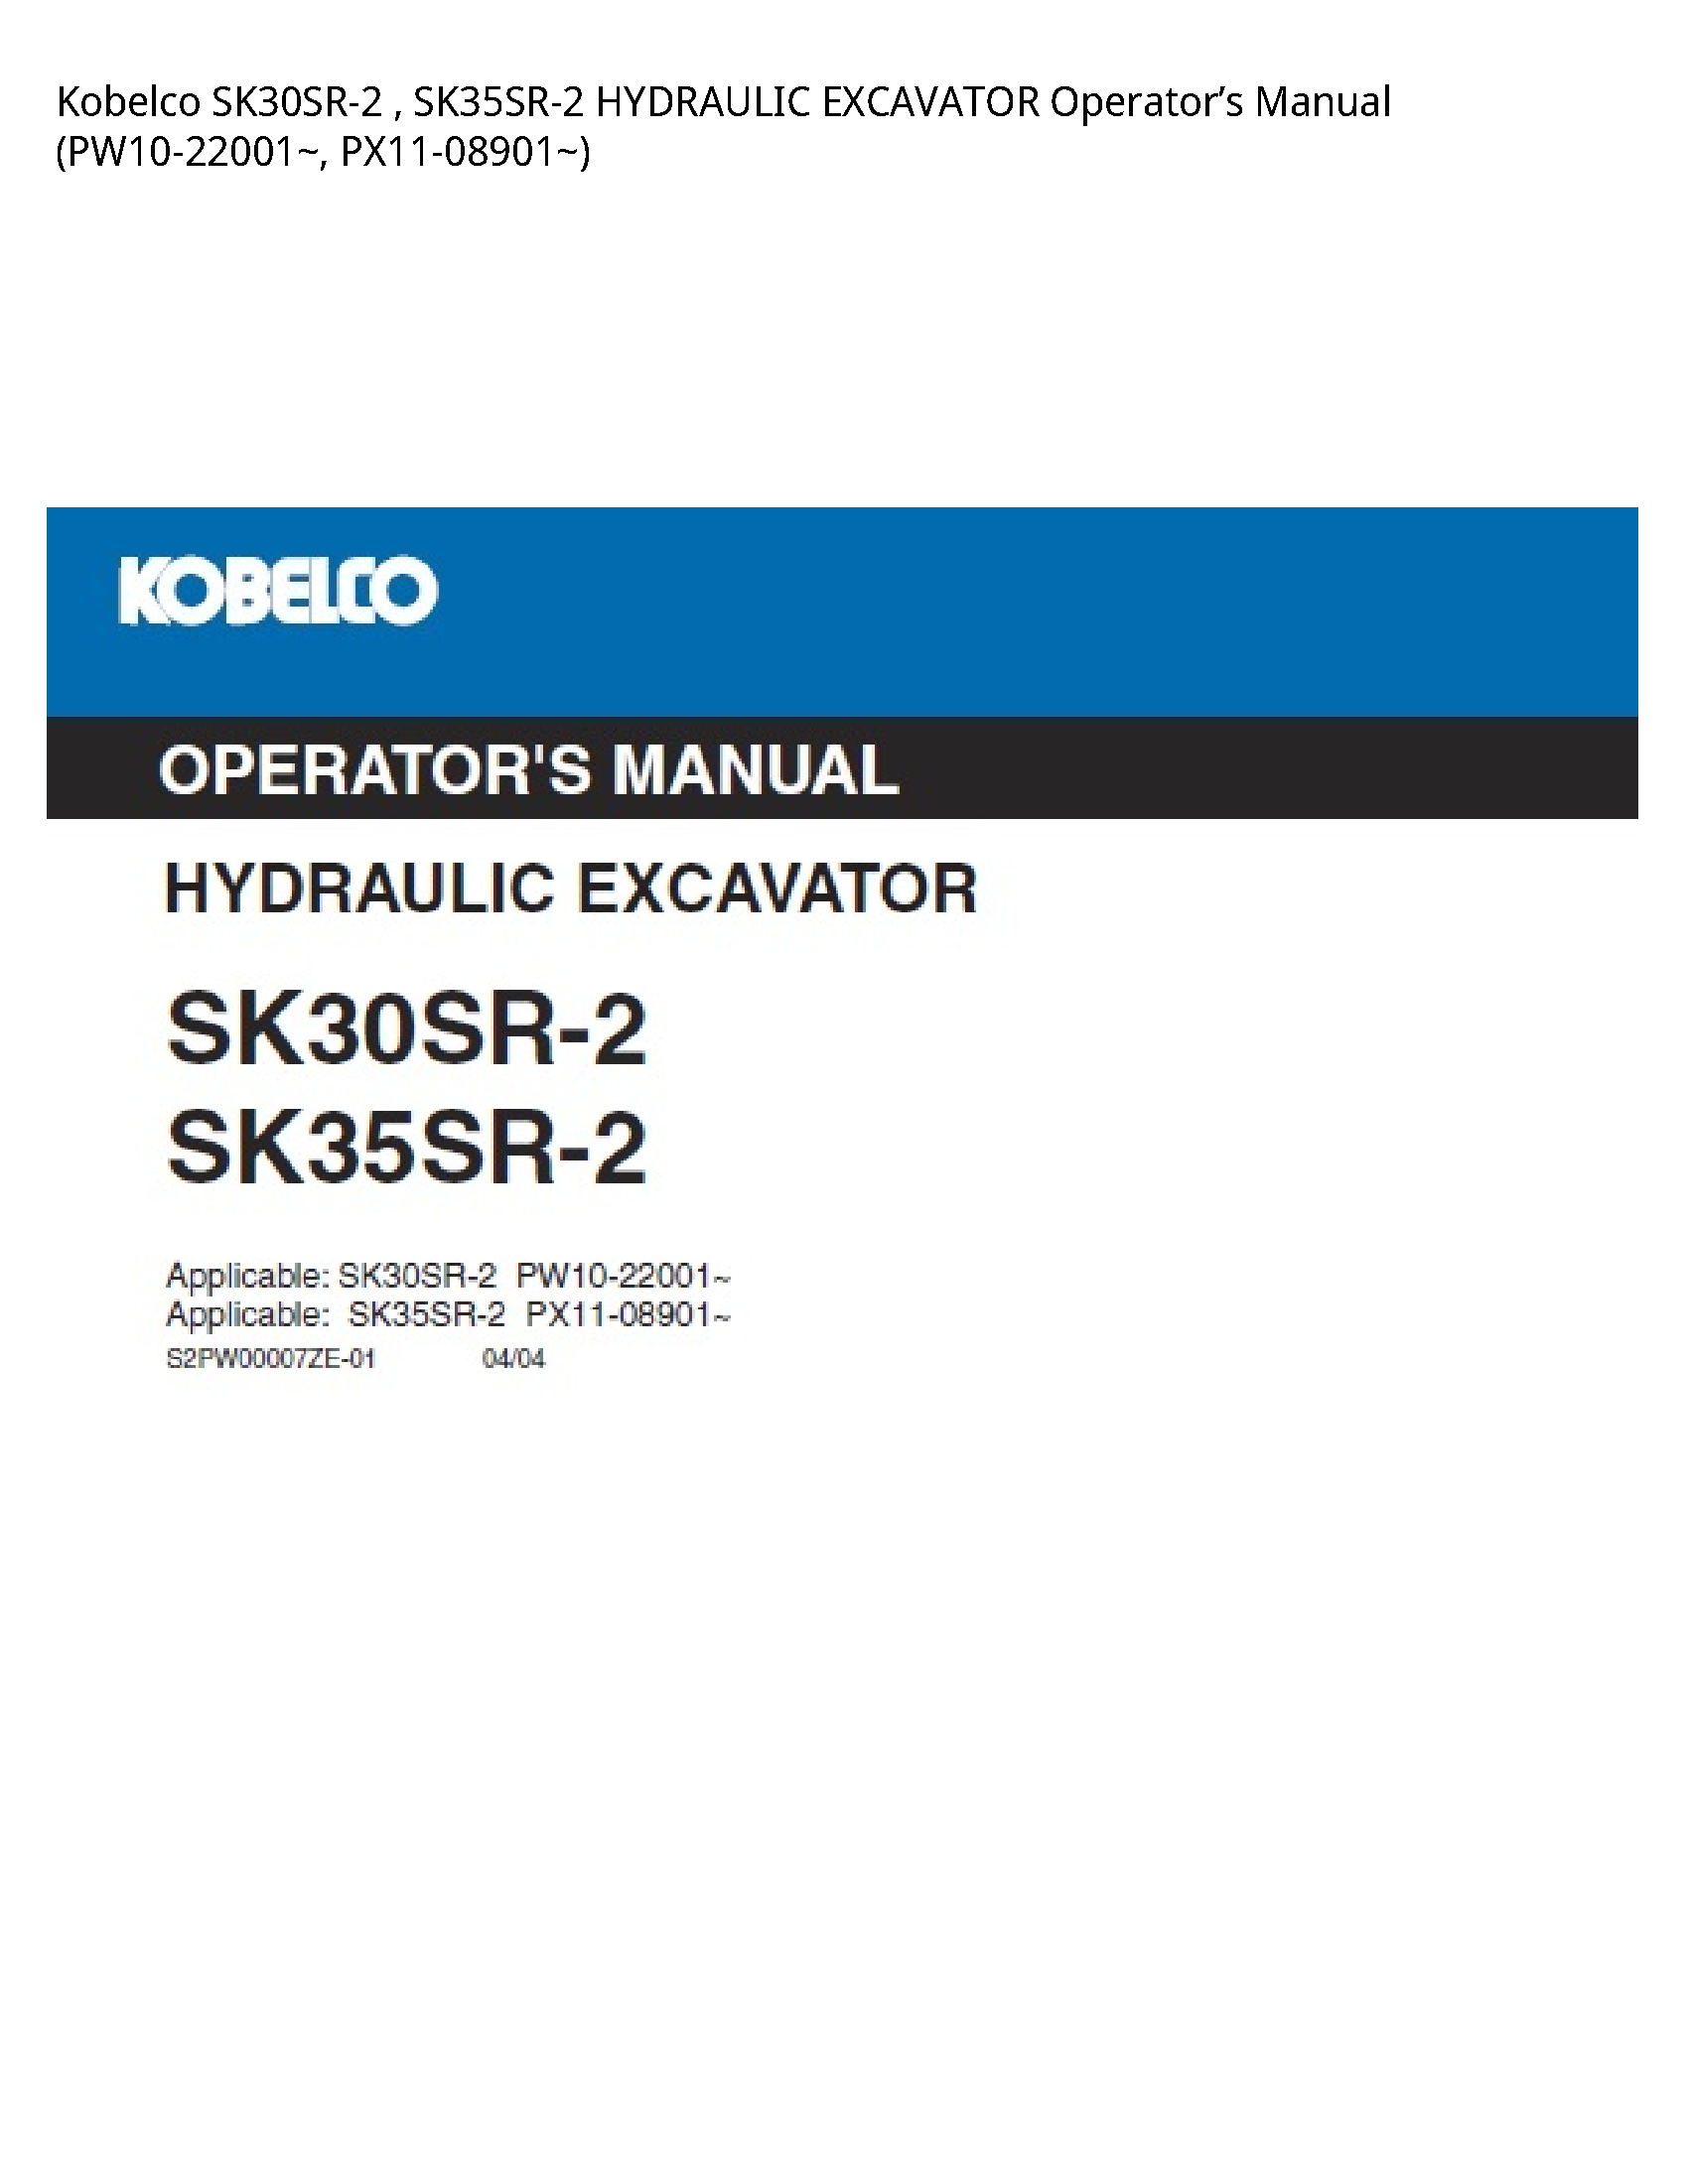 Kobelco SK30SR-2 HYDRAULIC EXCAVATOR Operator’s manual